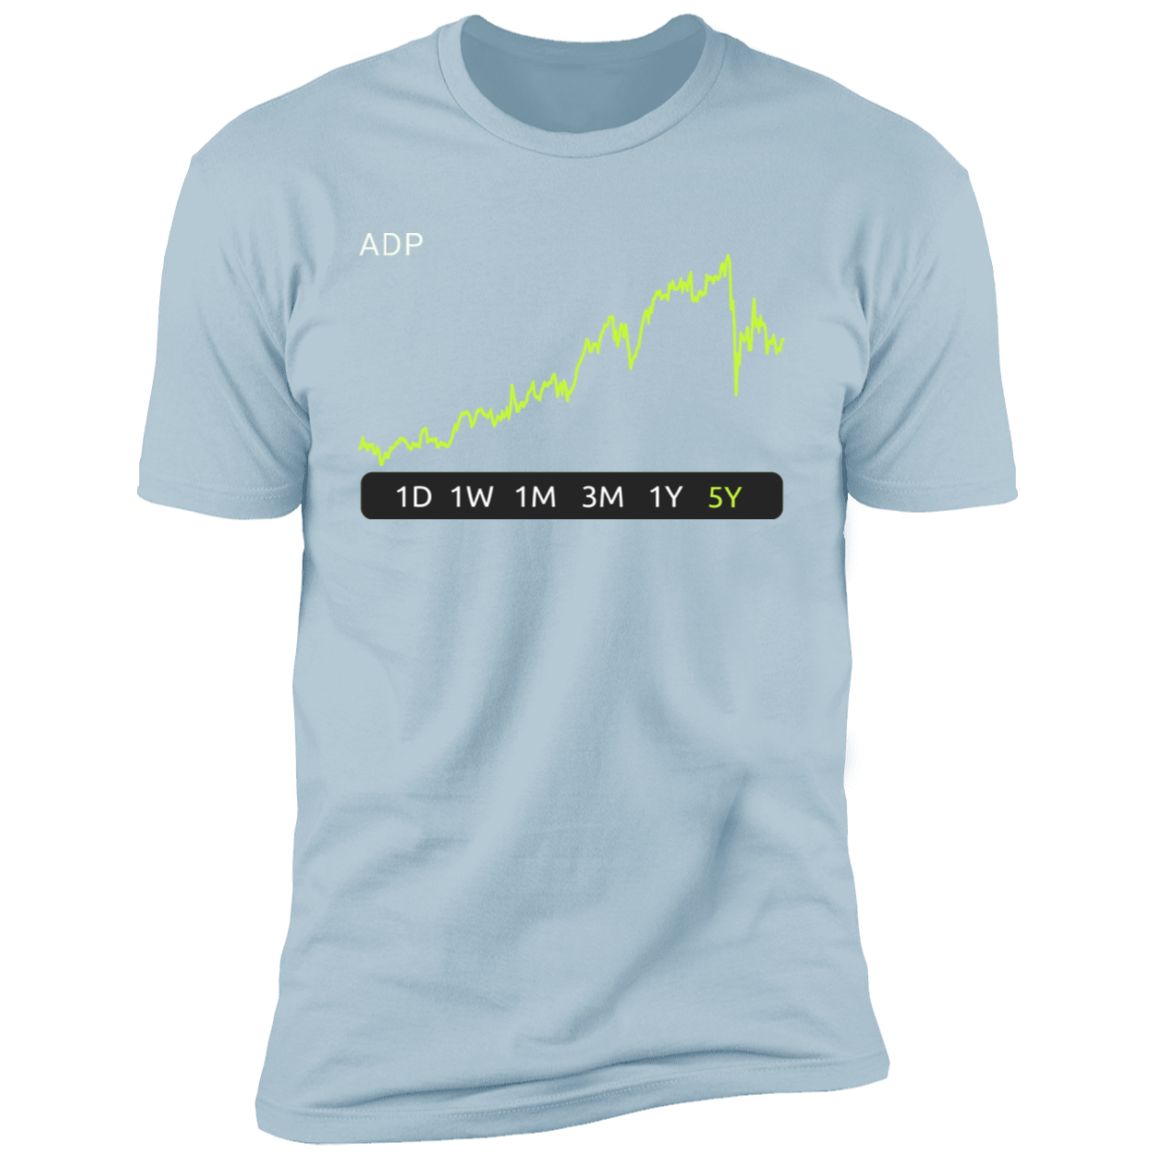 ADP Stock 5y Premium T-Shirt